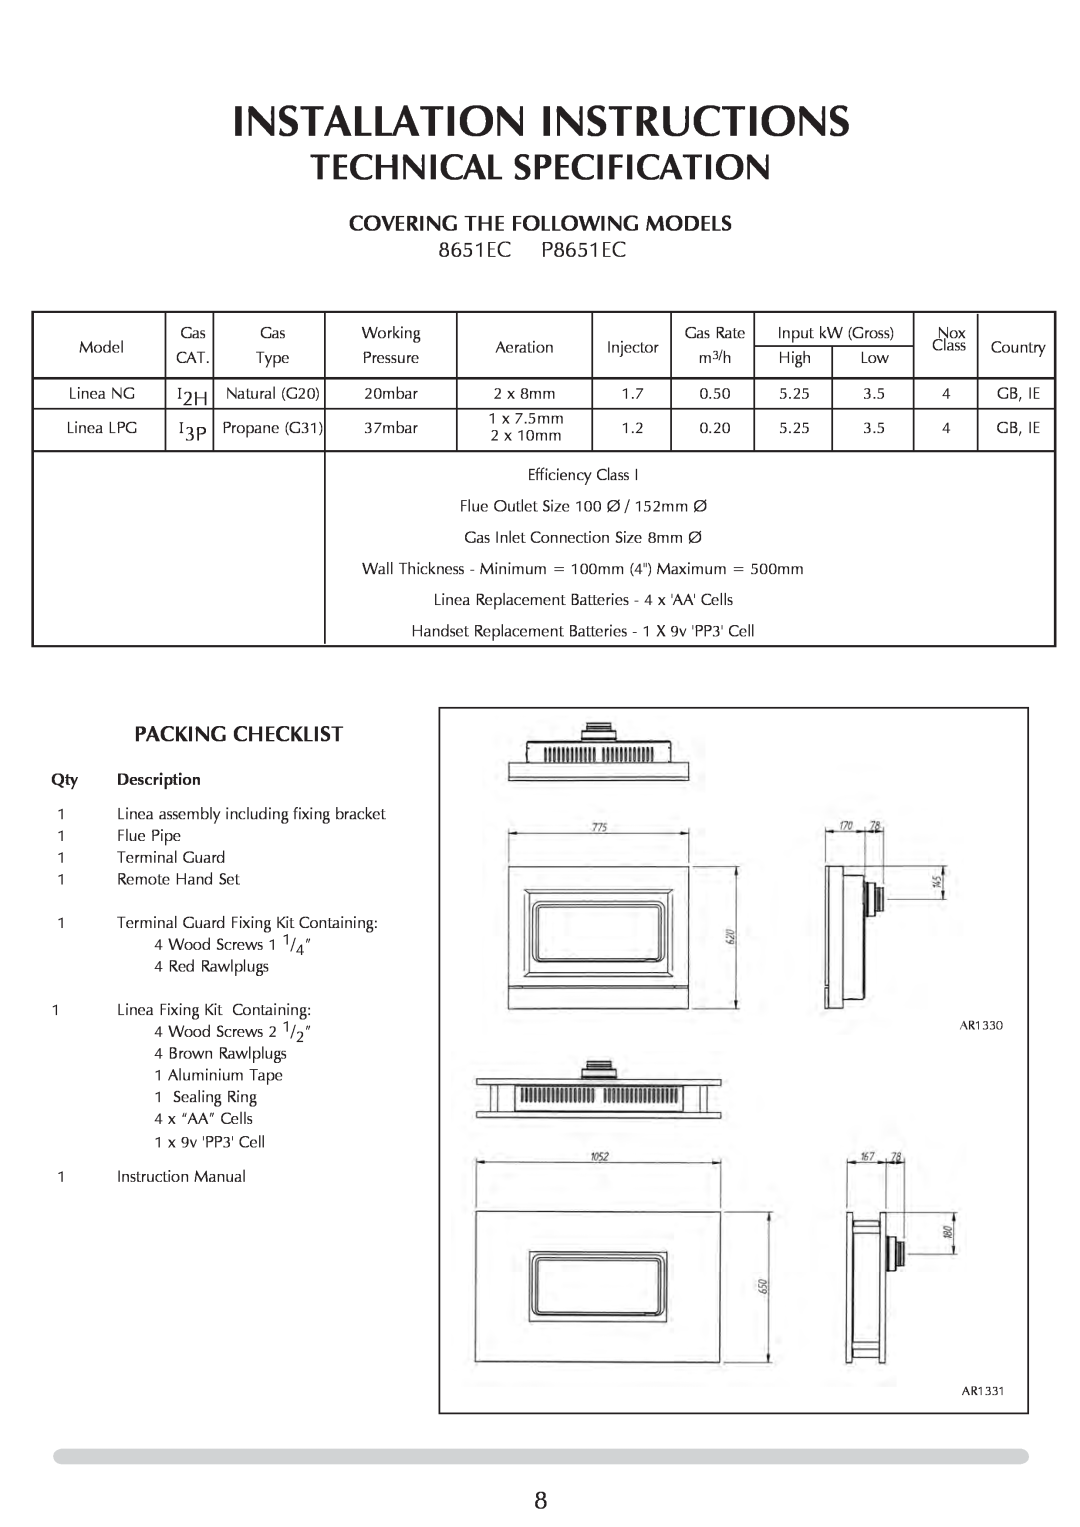 Stovax PR0731 manual Installation Instructions, Technical Specification, P8651EC 